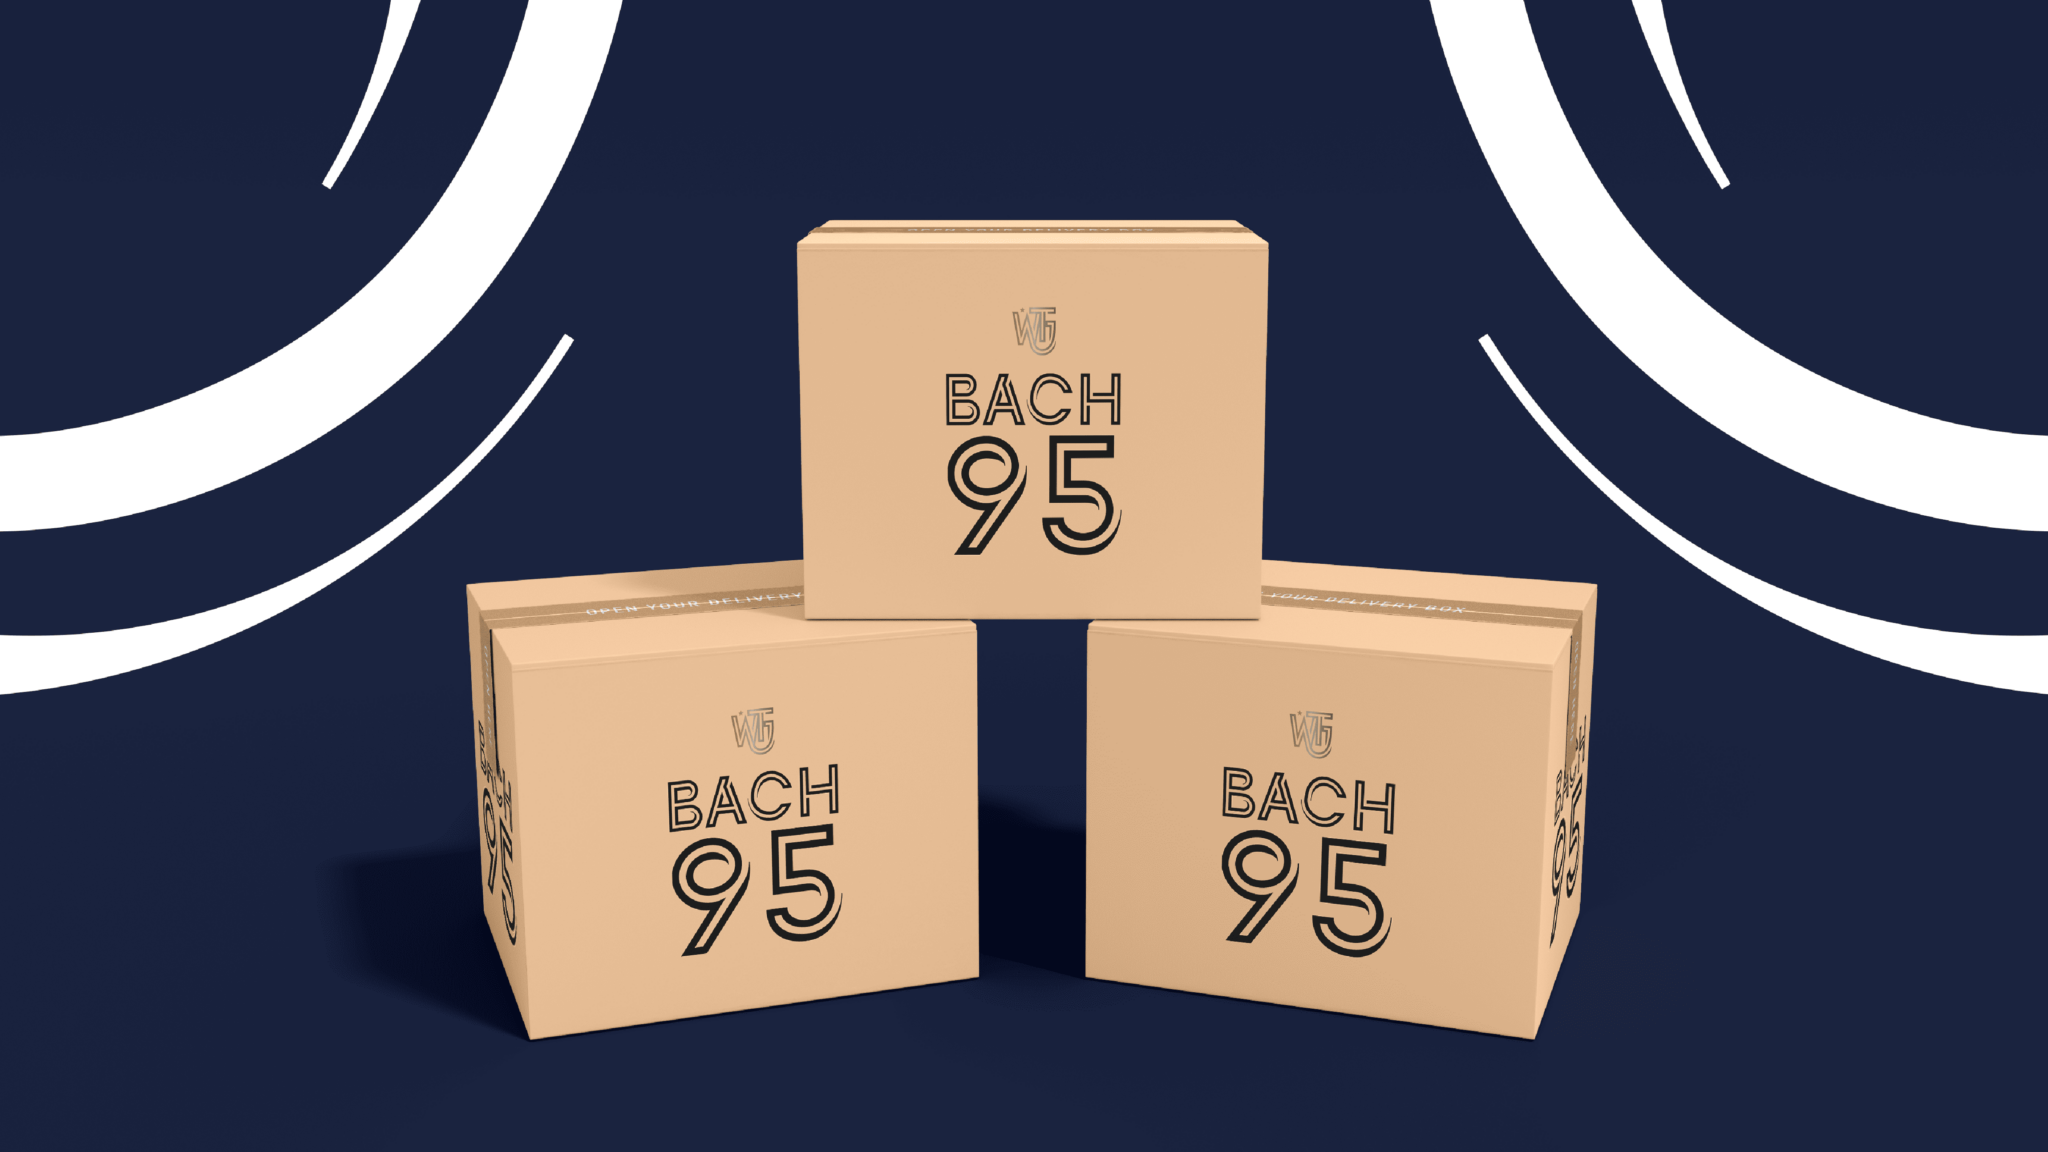 Bach 95 Branding – All Media